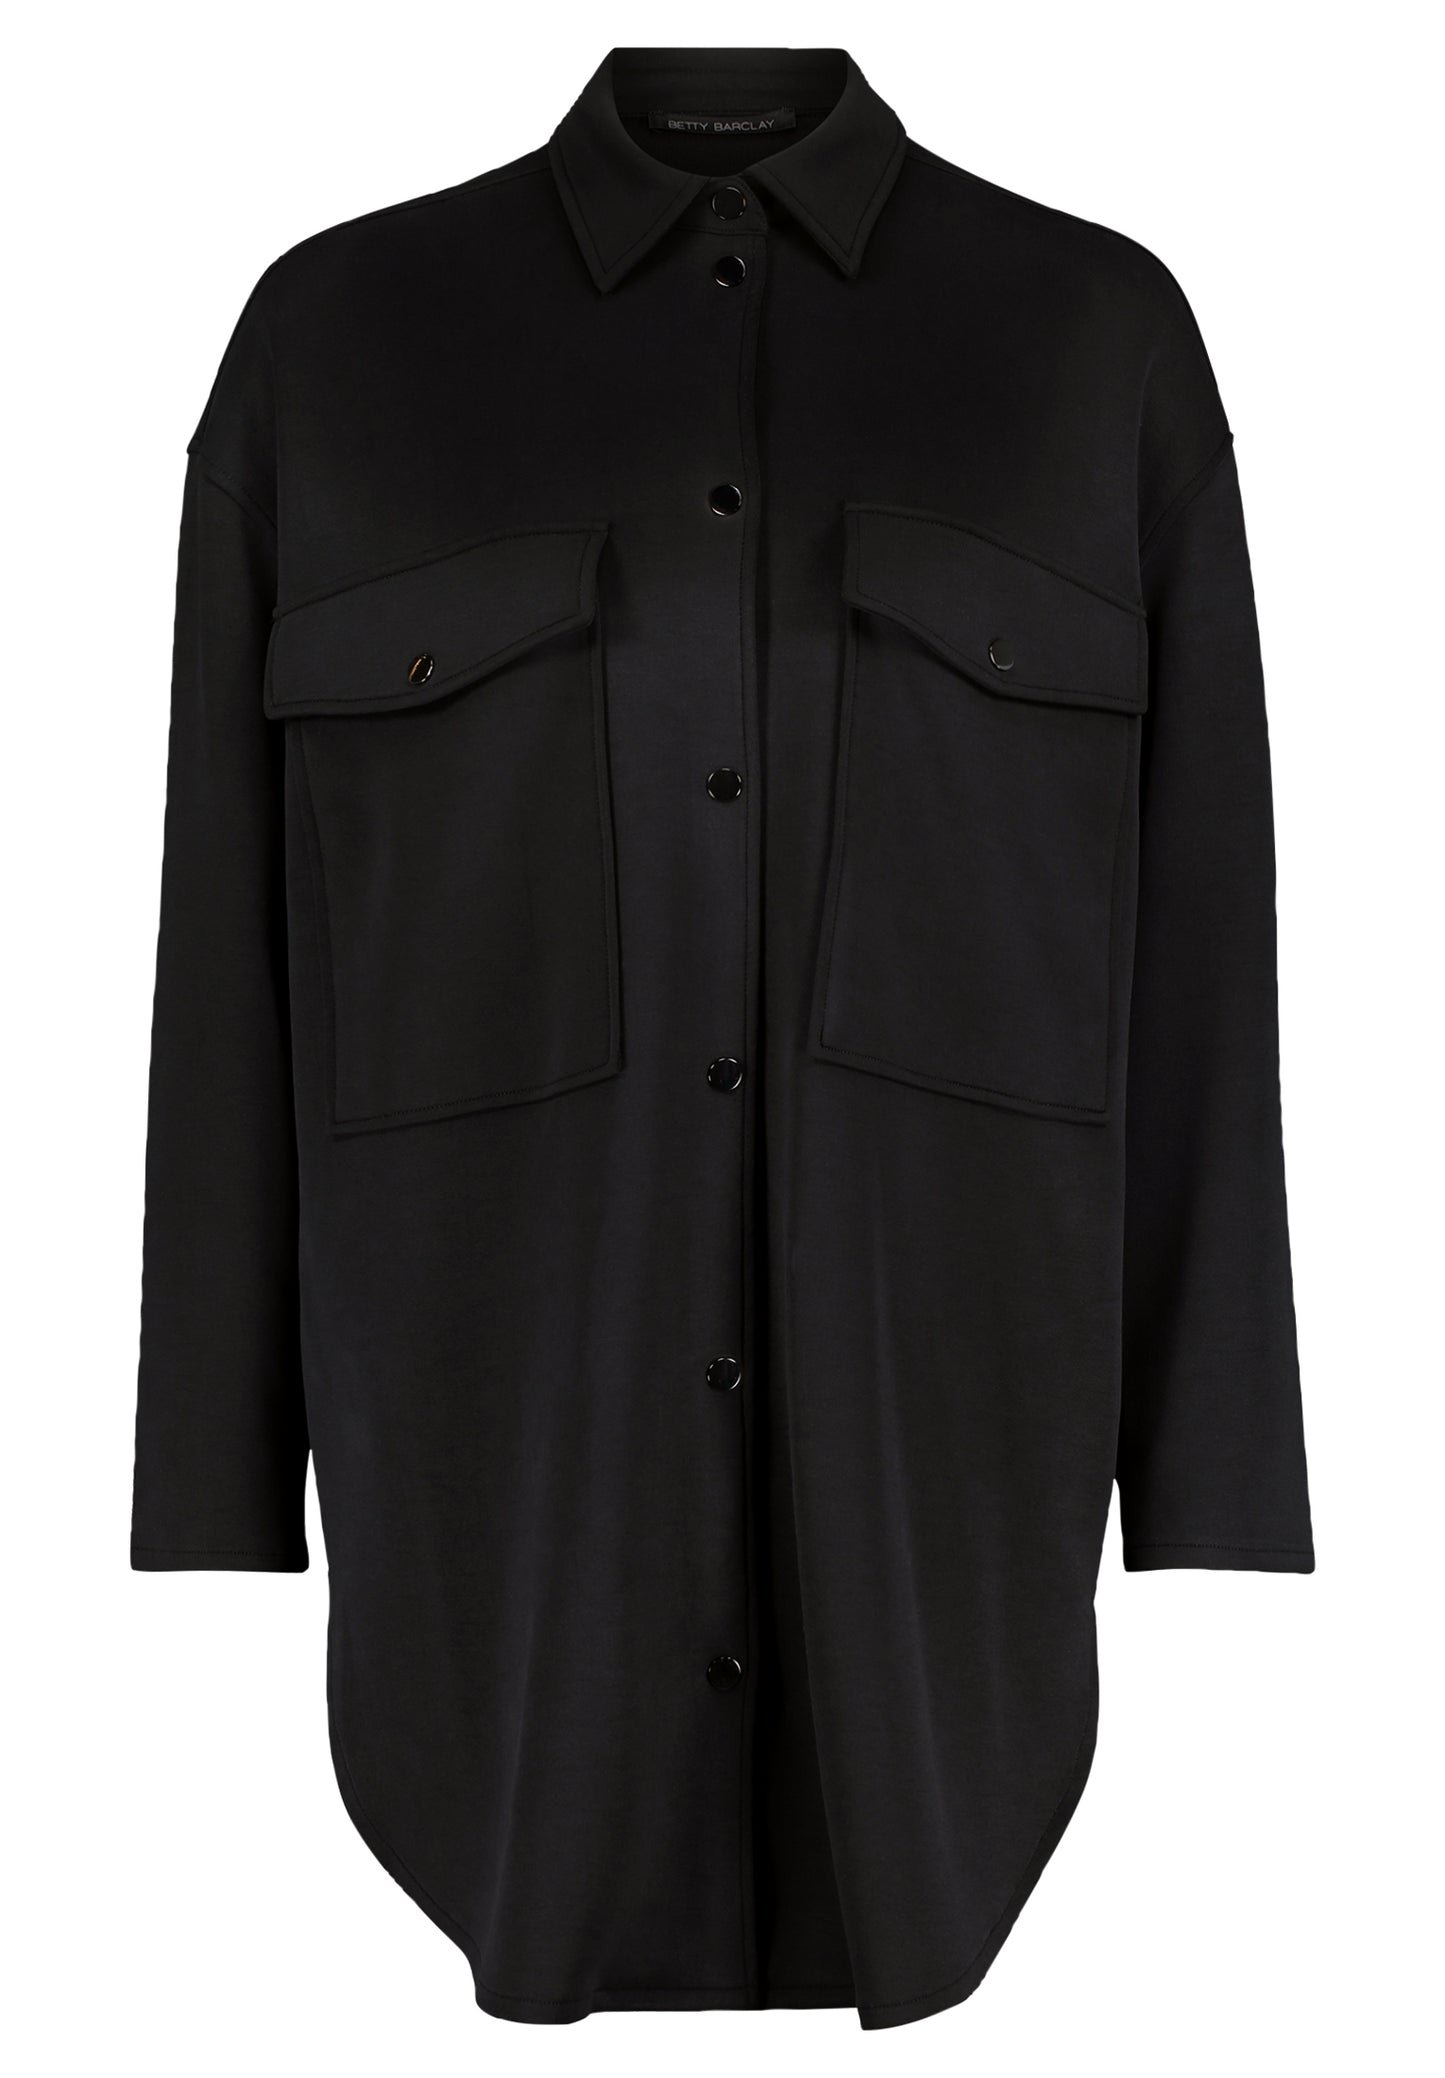 Blazer jacket long 1/1 sleeves